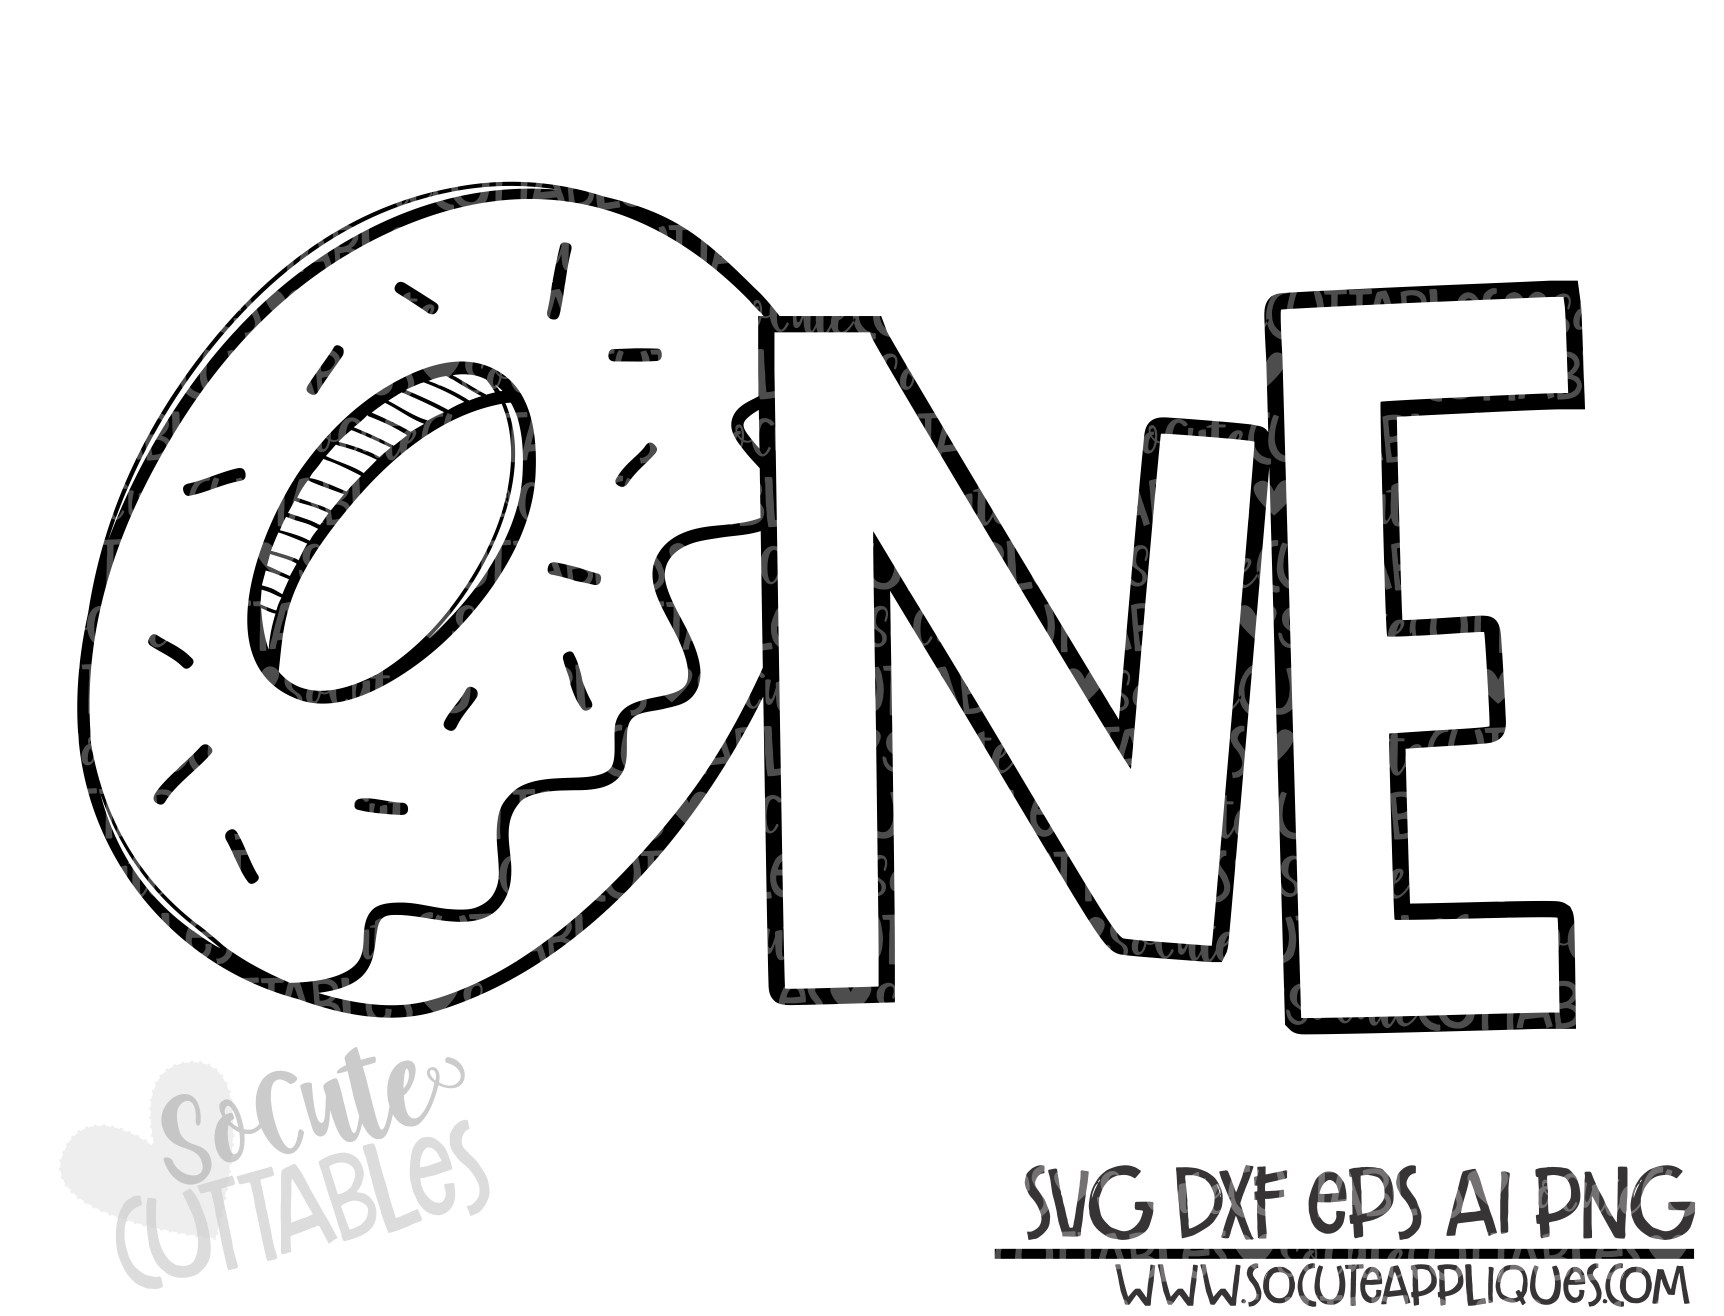 Download One Donut Welded 19 Scc Svg Socuteappliques Net